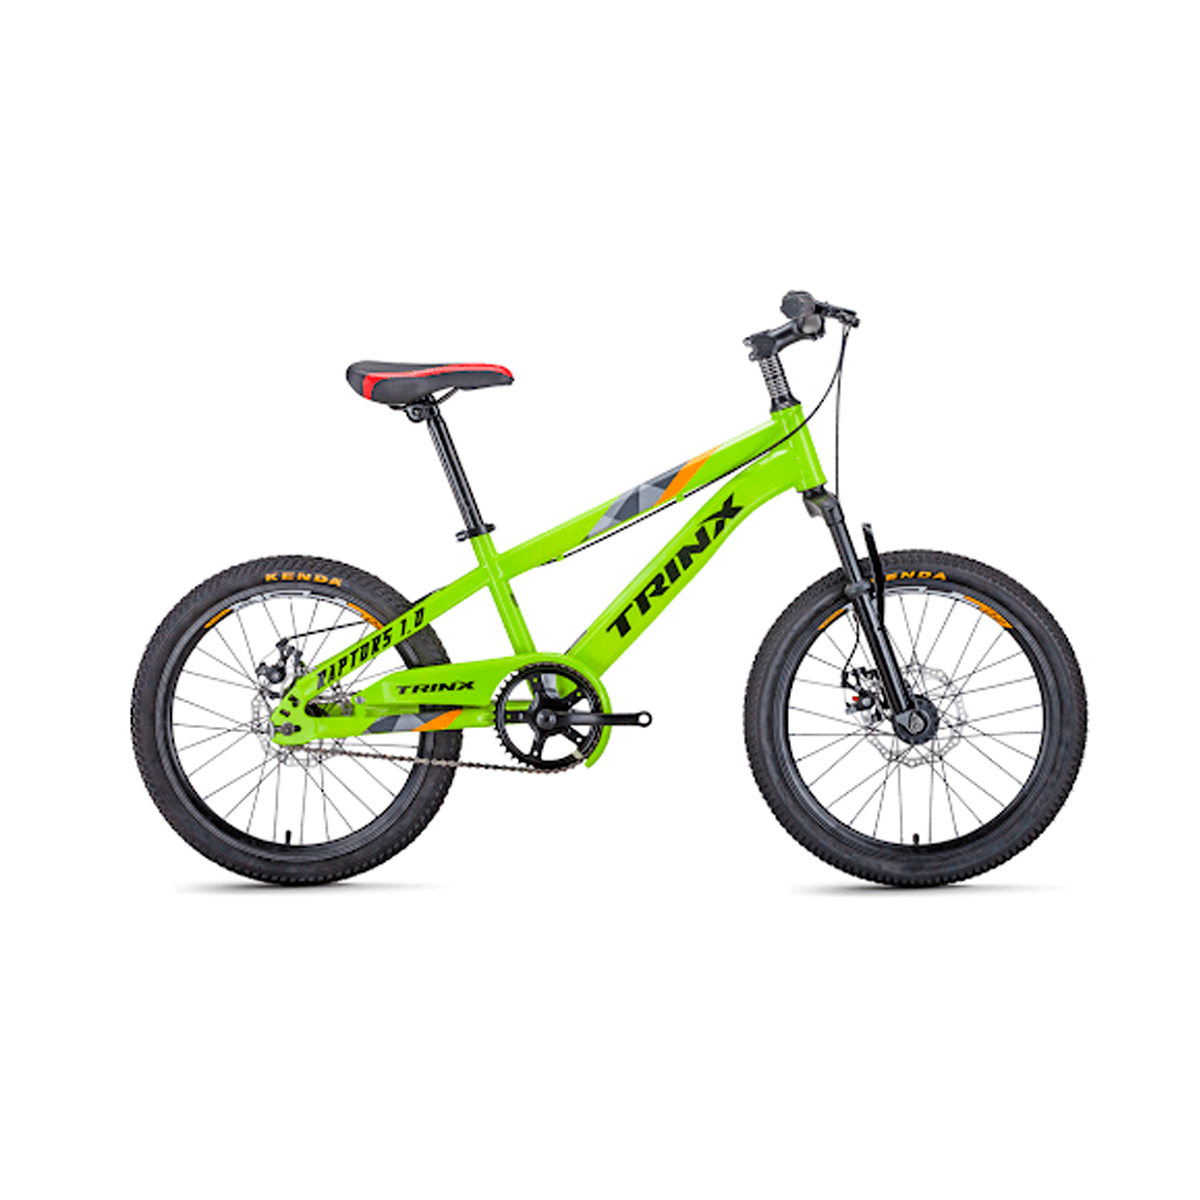 Bicicleta Trinx R-20 Raptors 1.0 Infantil Rodado 20 Ciclismo